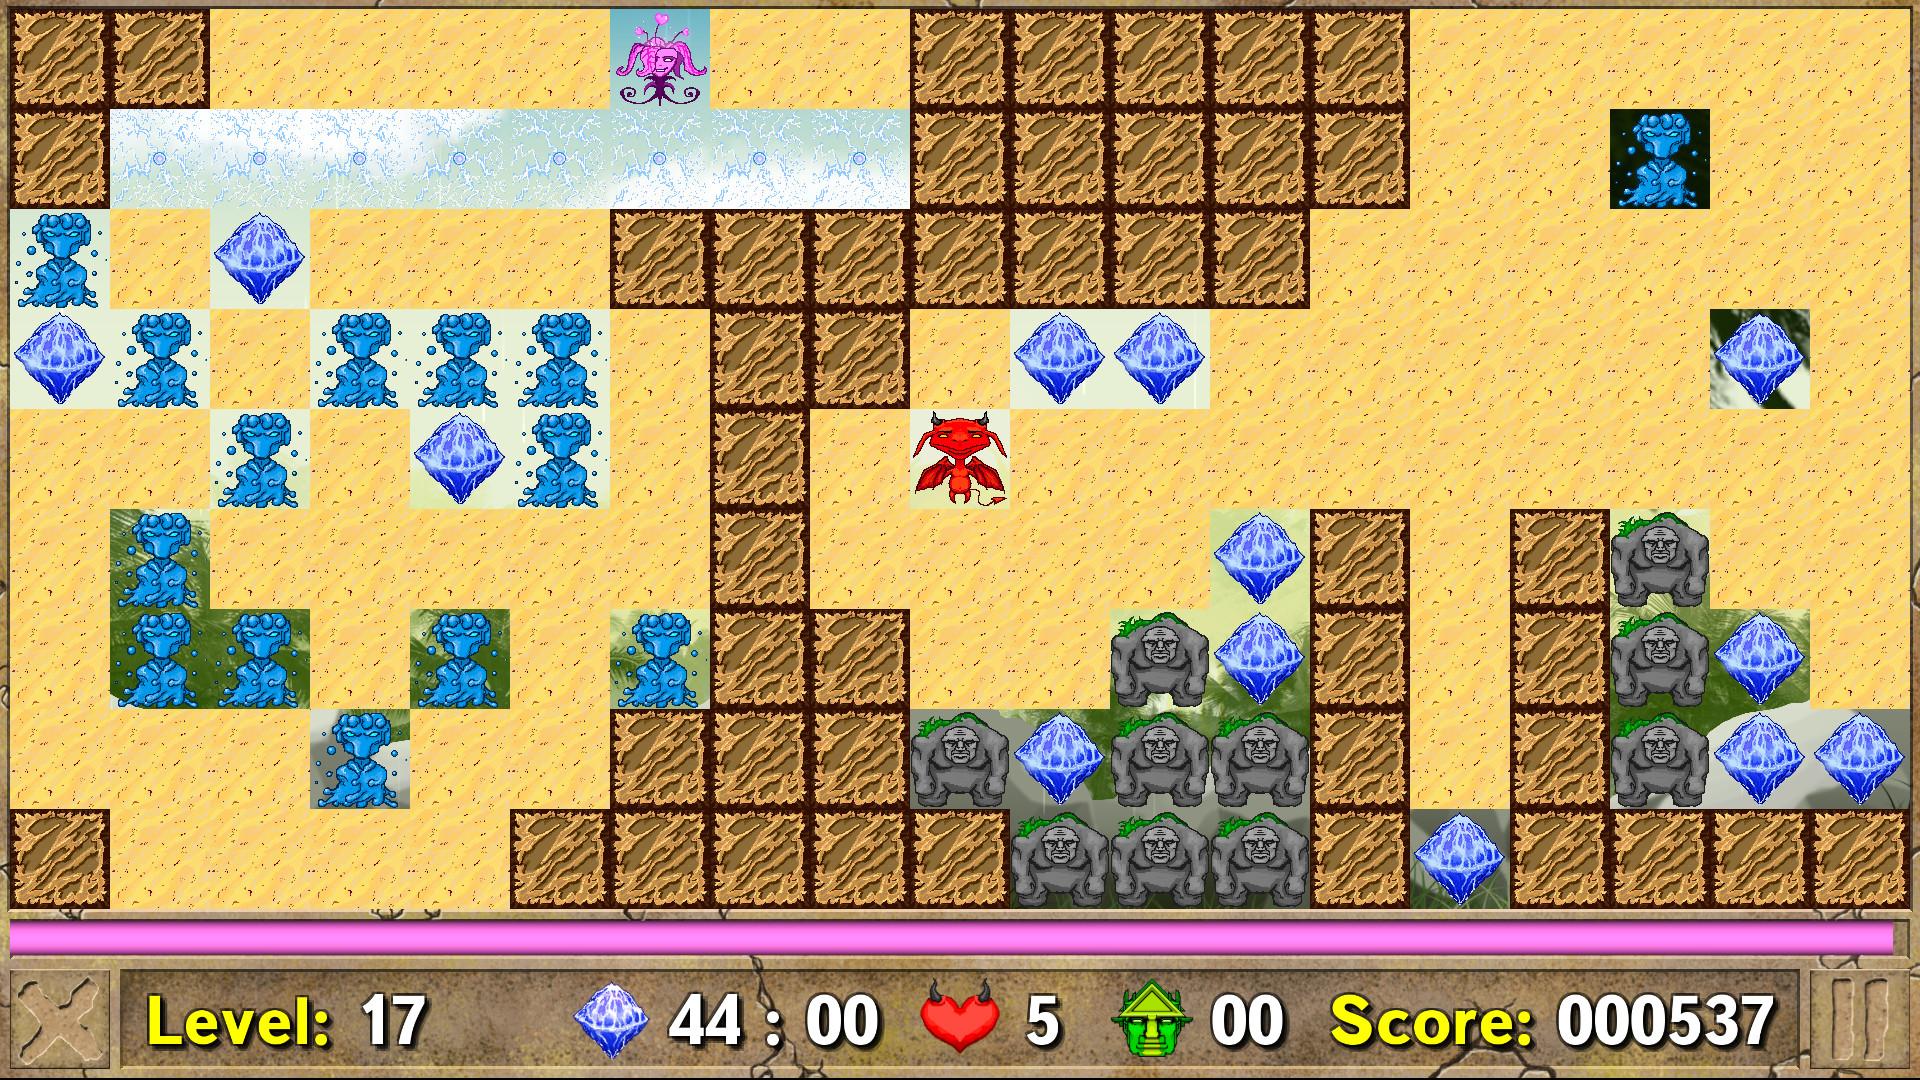 Screenshot №8 from game Elems